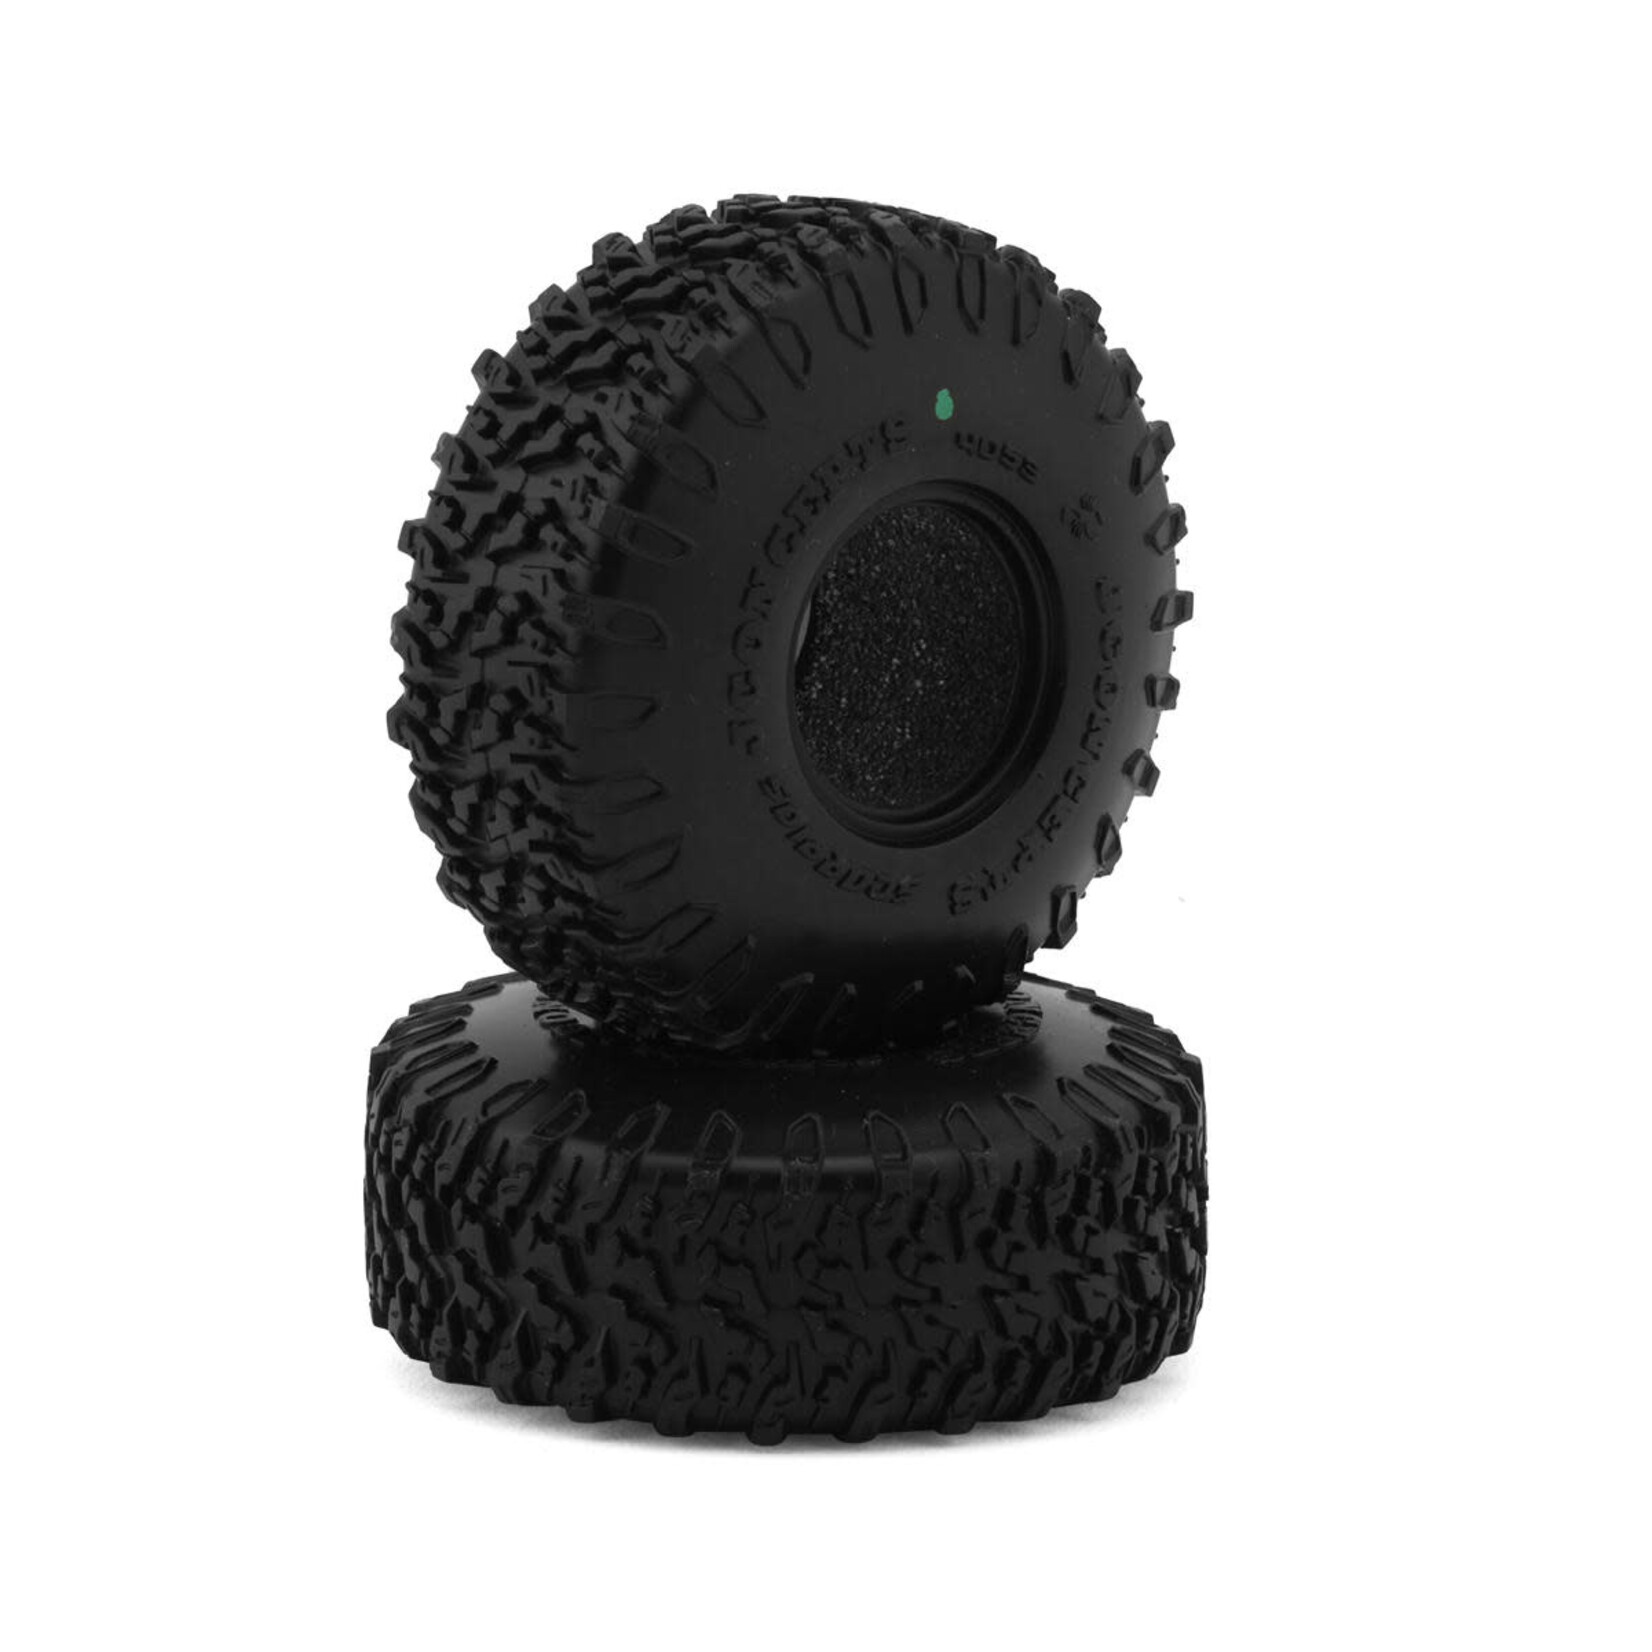 JConcepts JConcepts Scorpios 1.0" Micro Crawler Tires (2) (Green) #4053-02